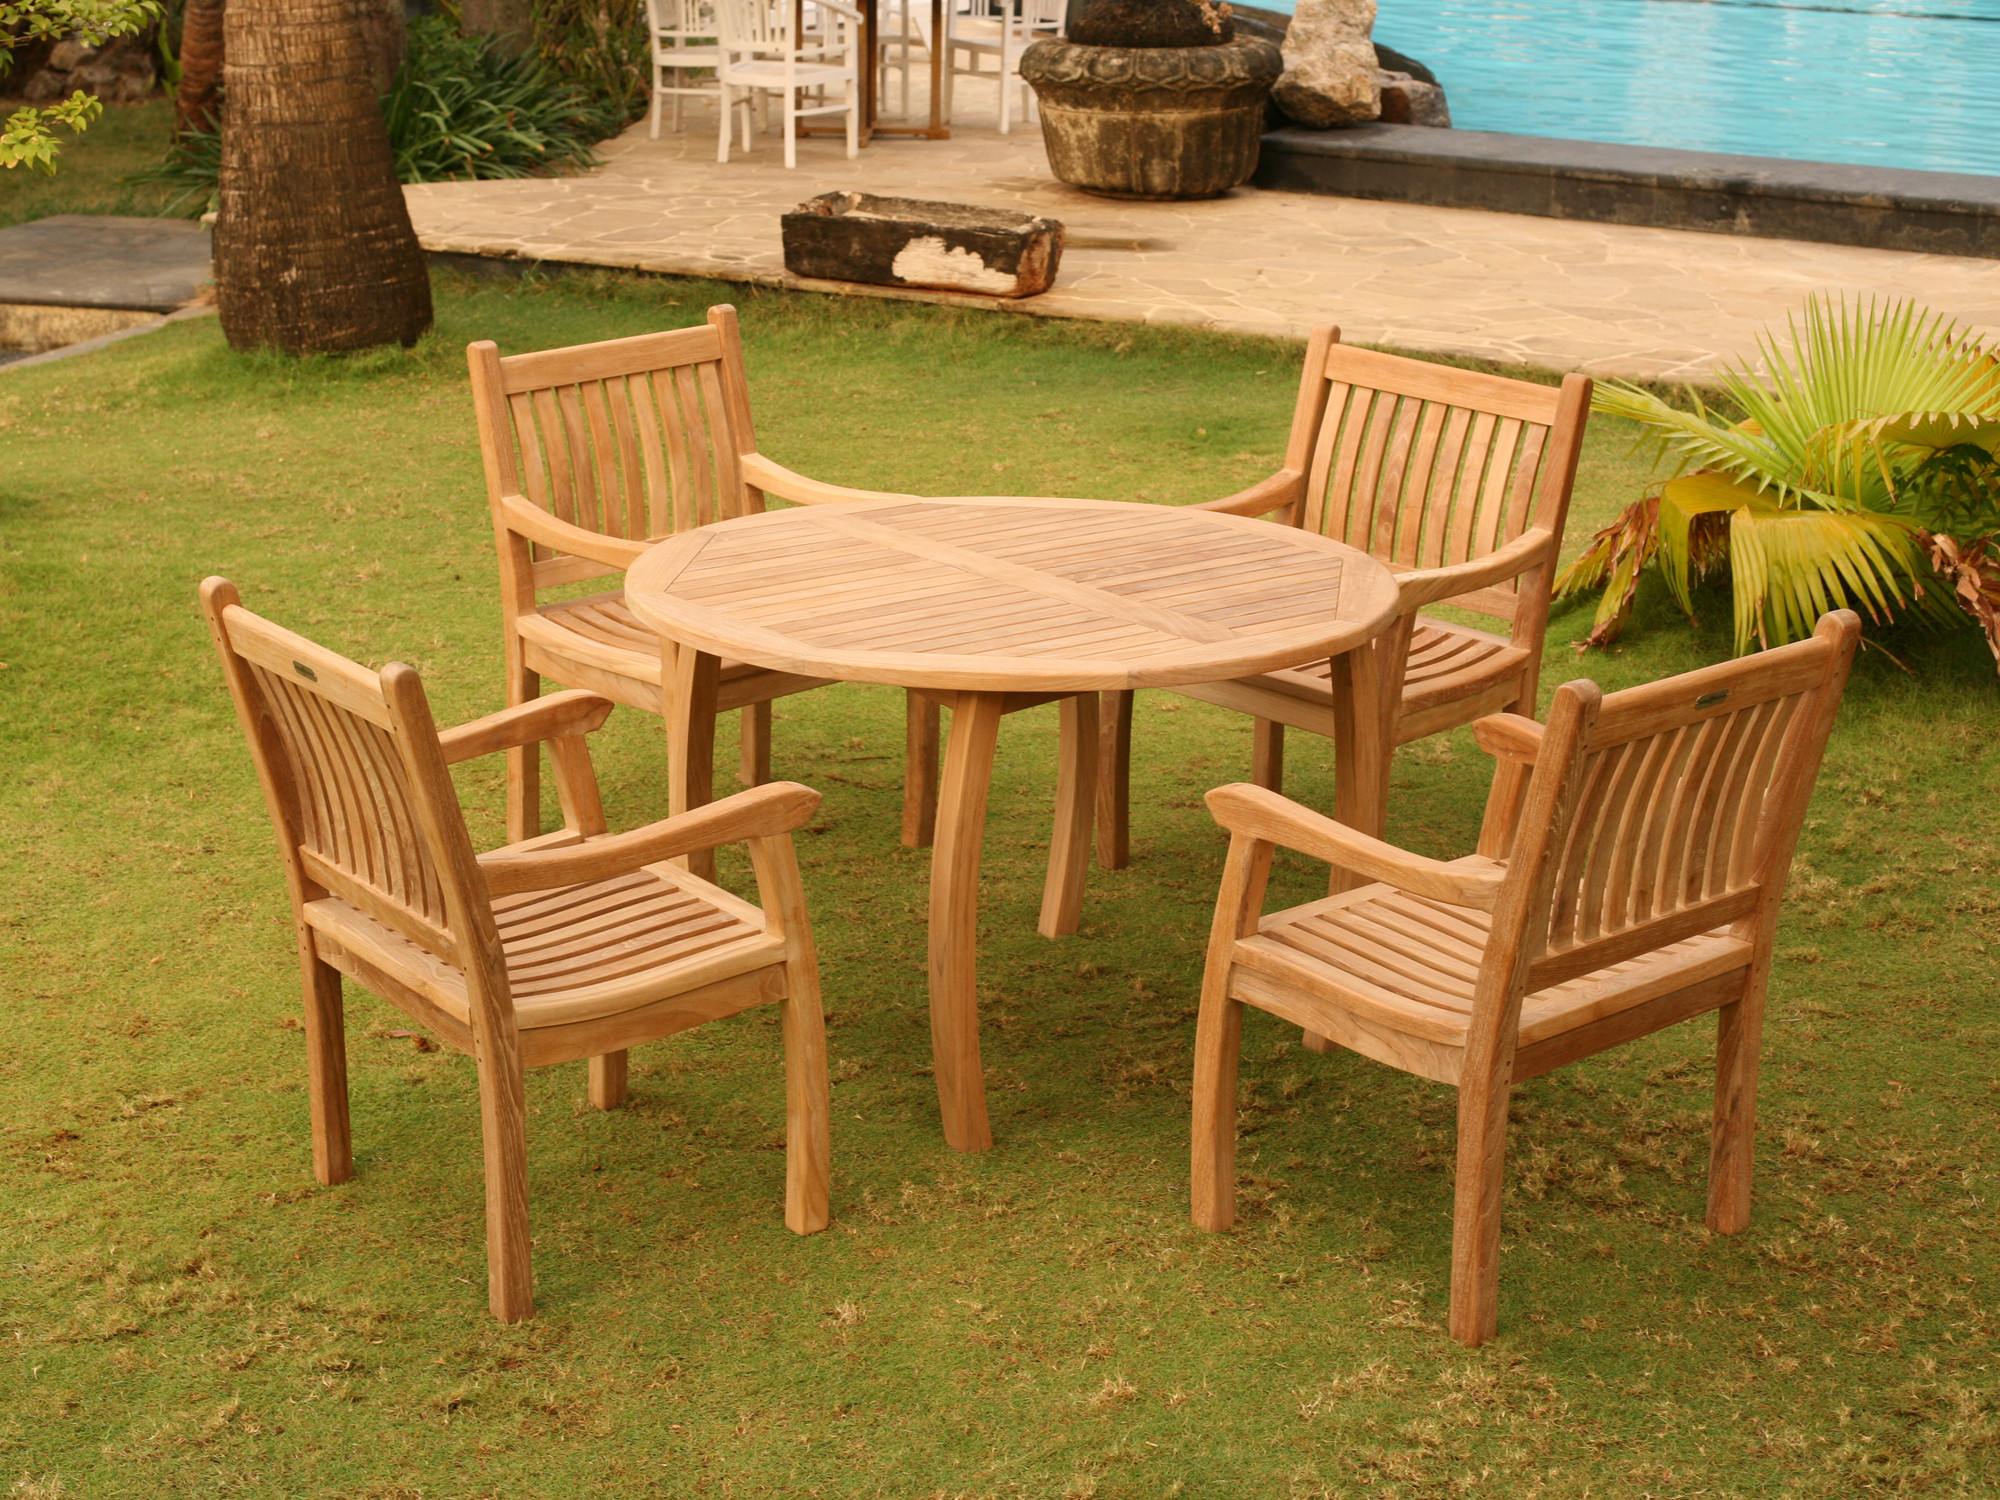 Best ideas about Teak Patio Furniture
. Save or Pin Jakarta Teak 5 pc Dining Set Teak Outdoor Furniture Now.